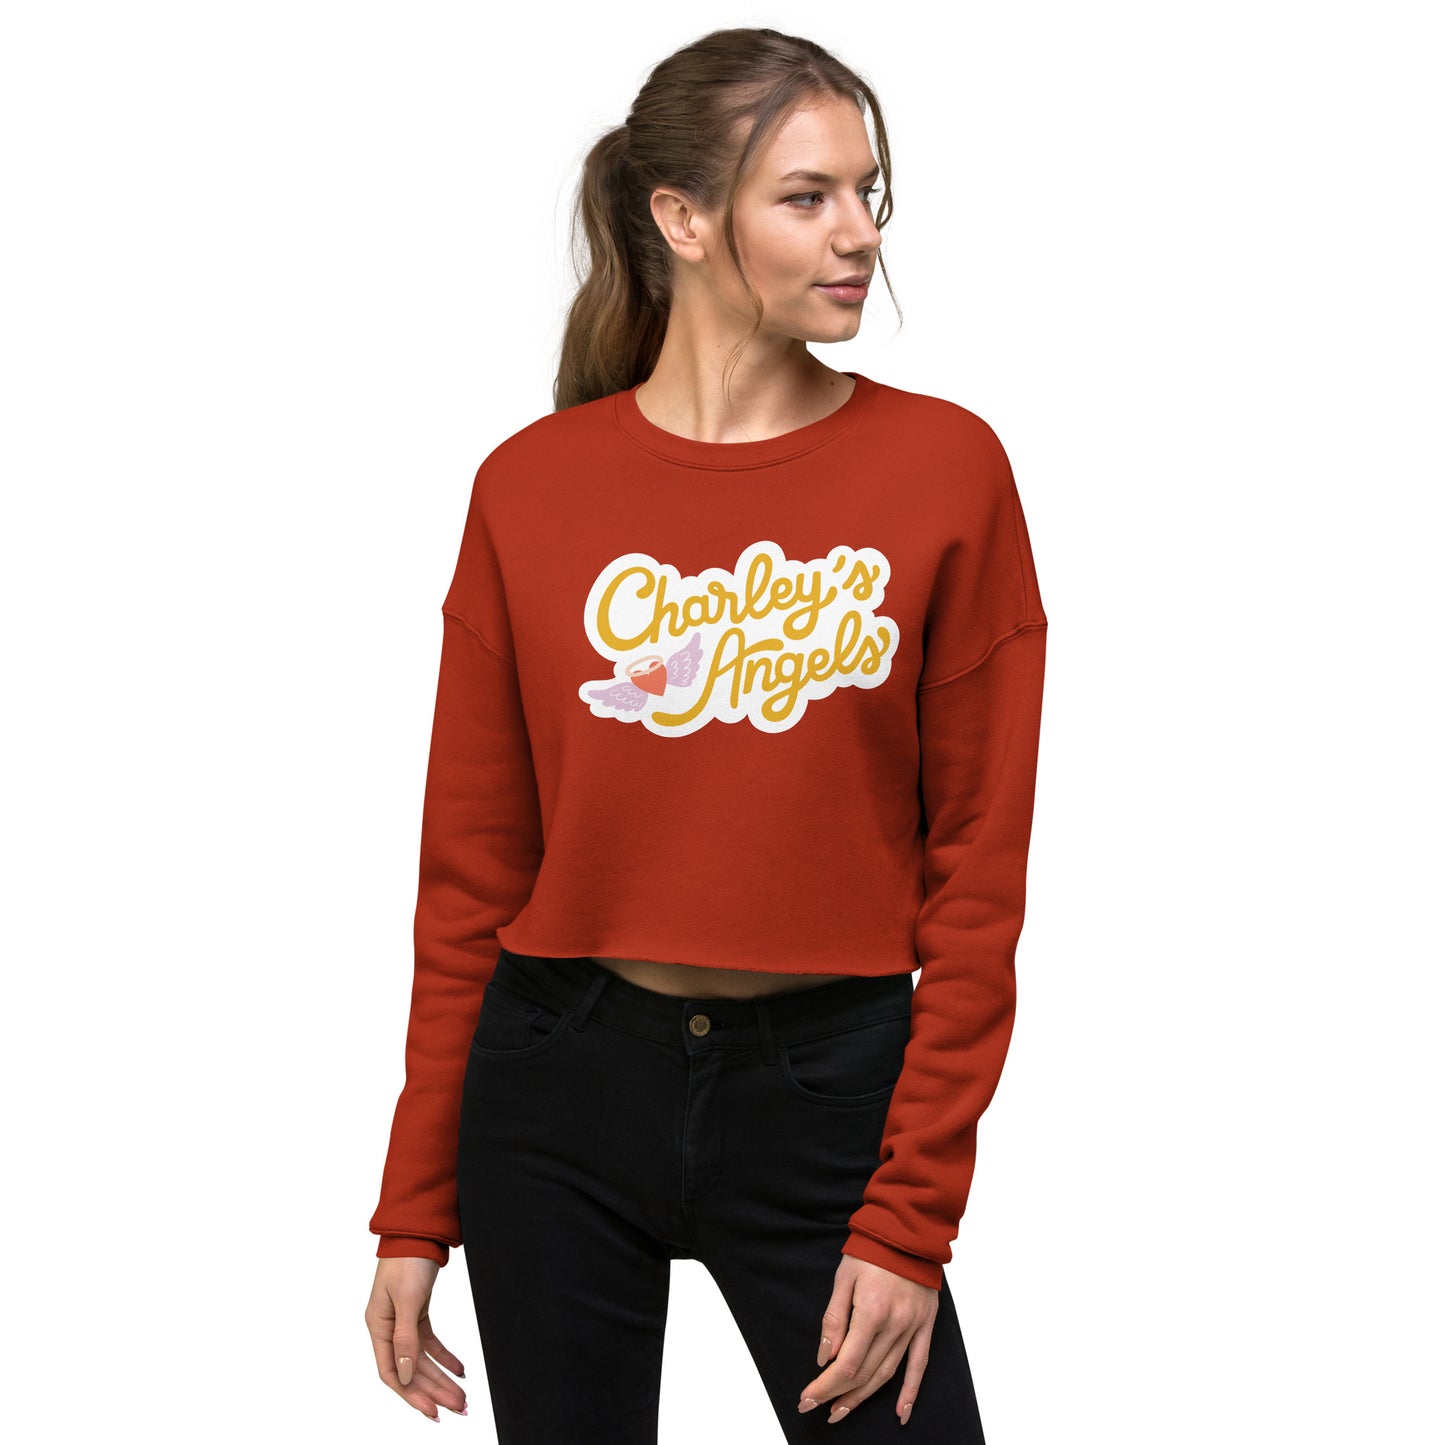 Charley's Angels — Crop Sweatshirt